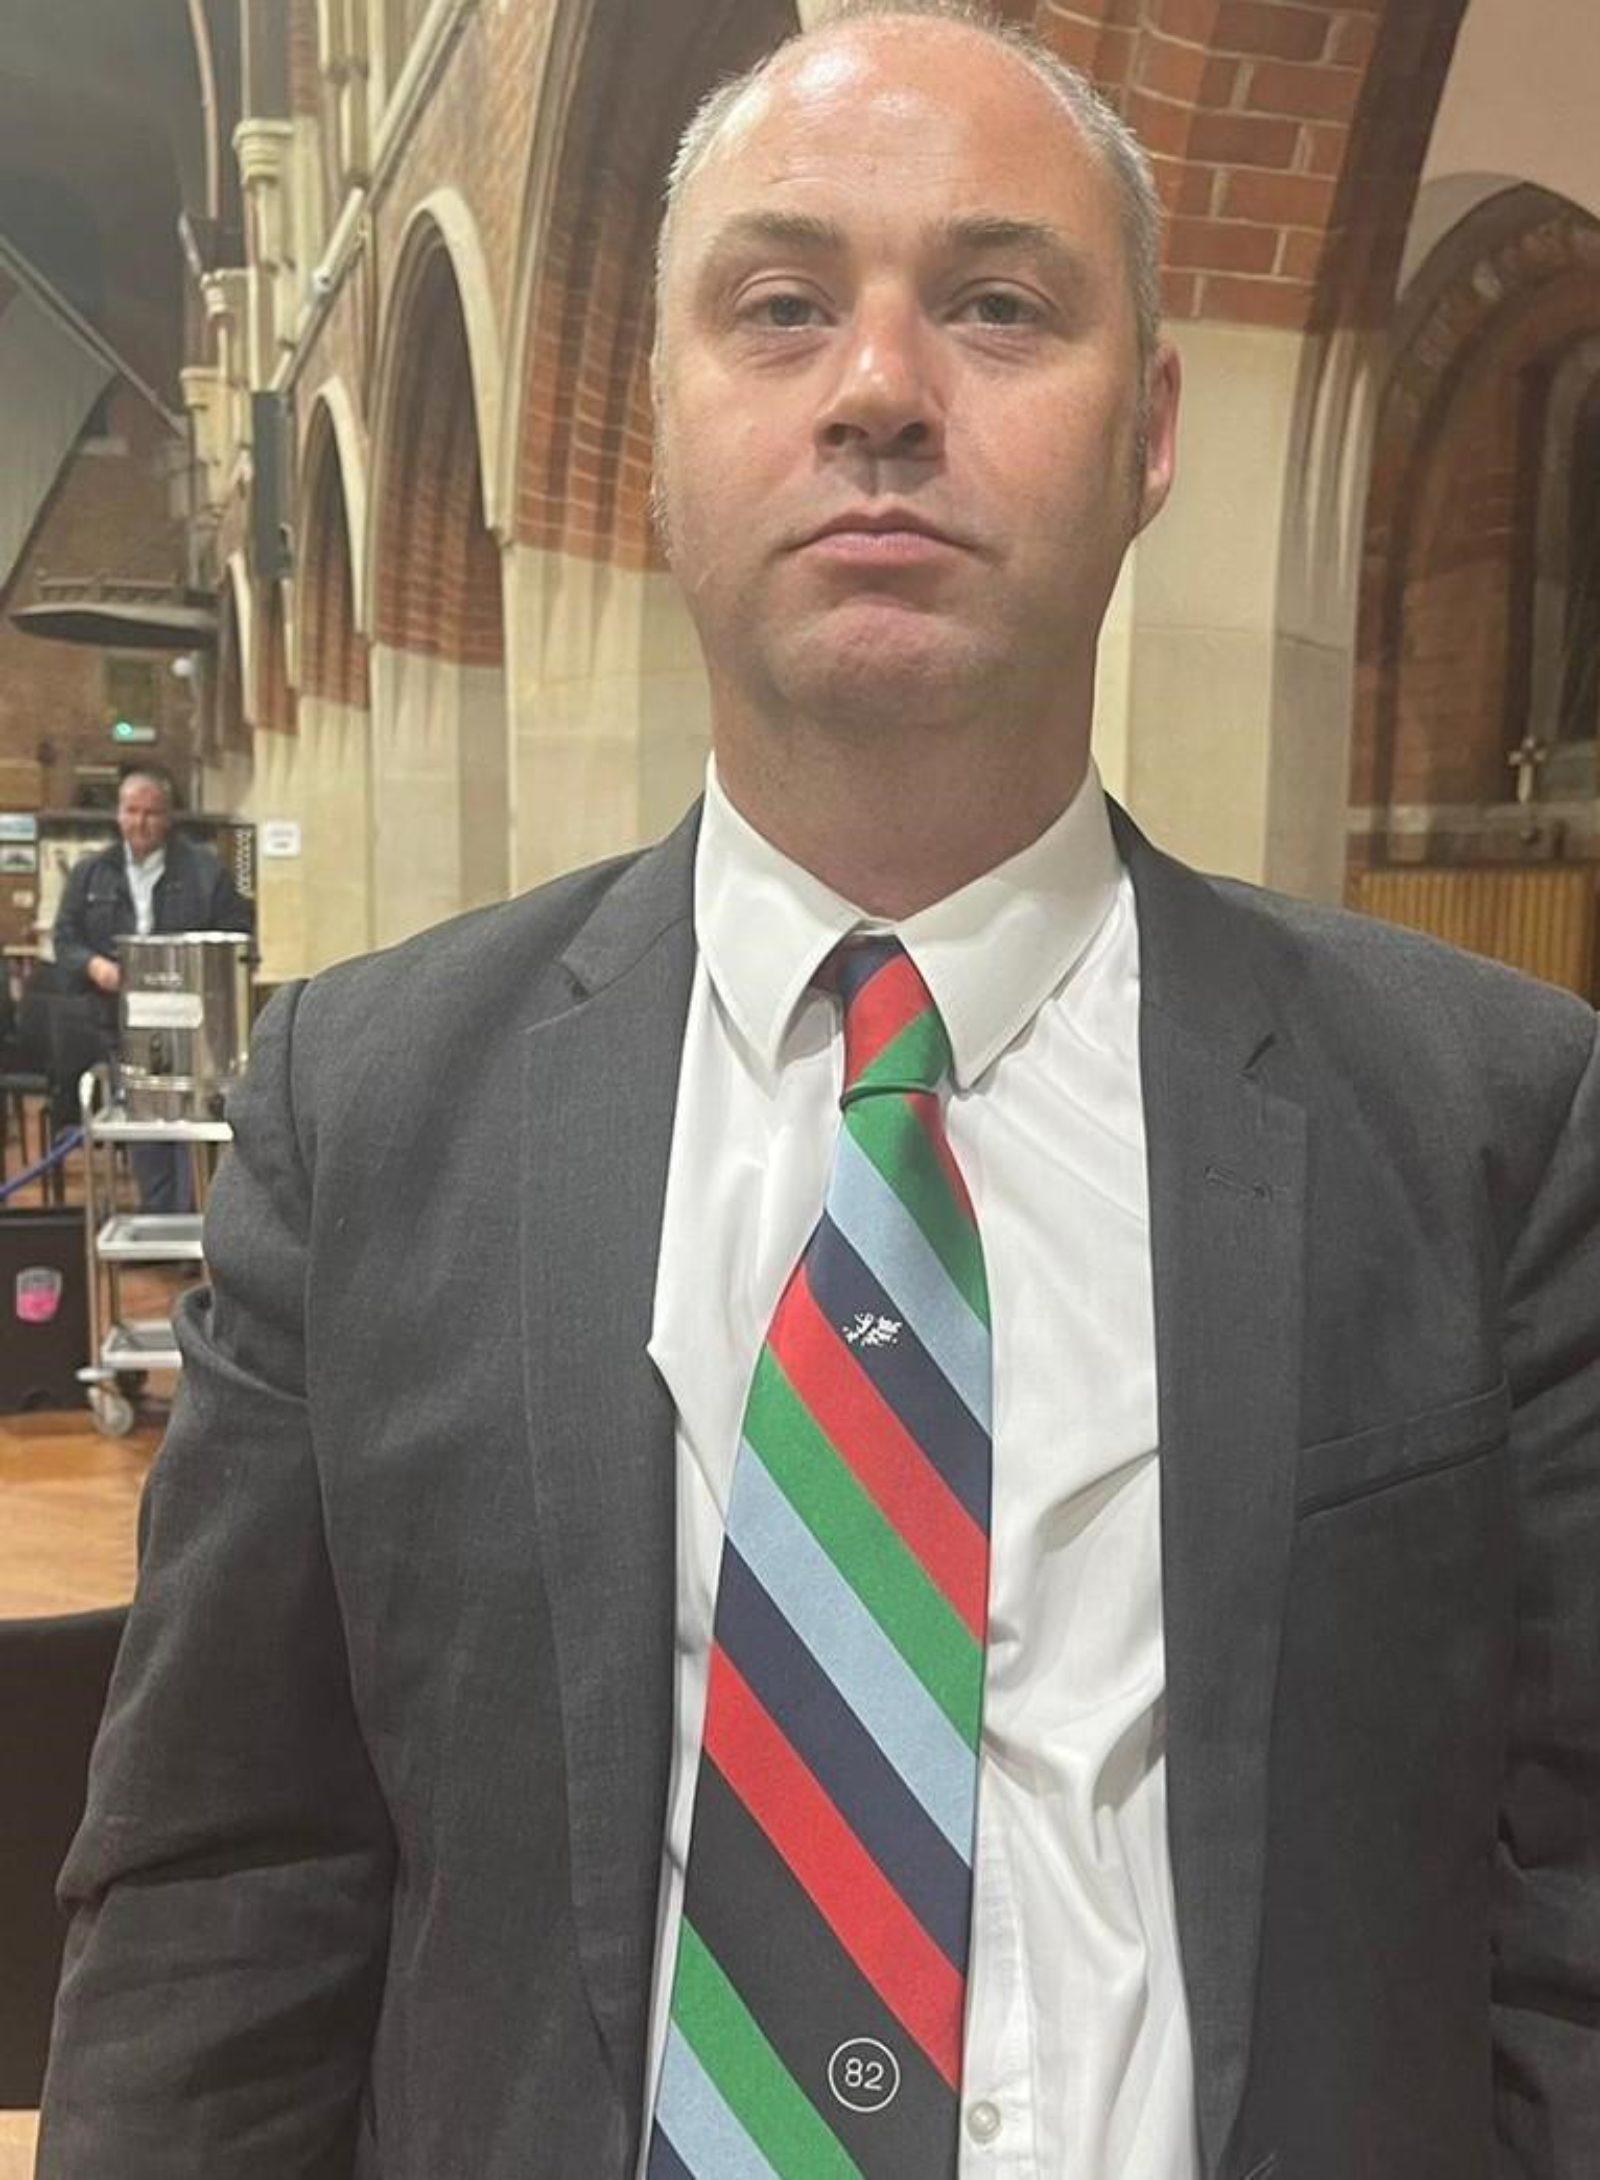 Cllr Prenter wearing a tie commemorating the Falklands conflict